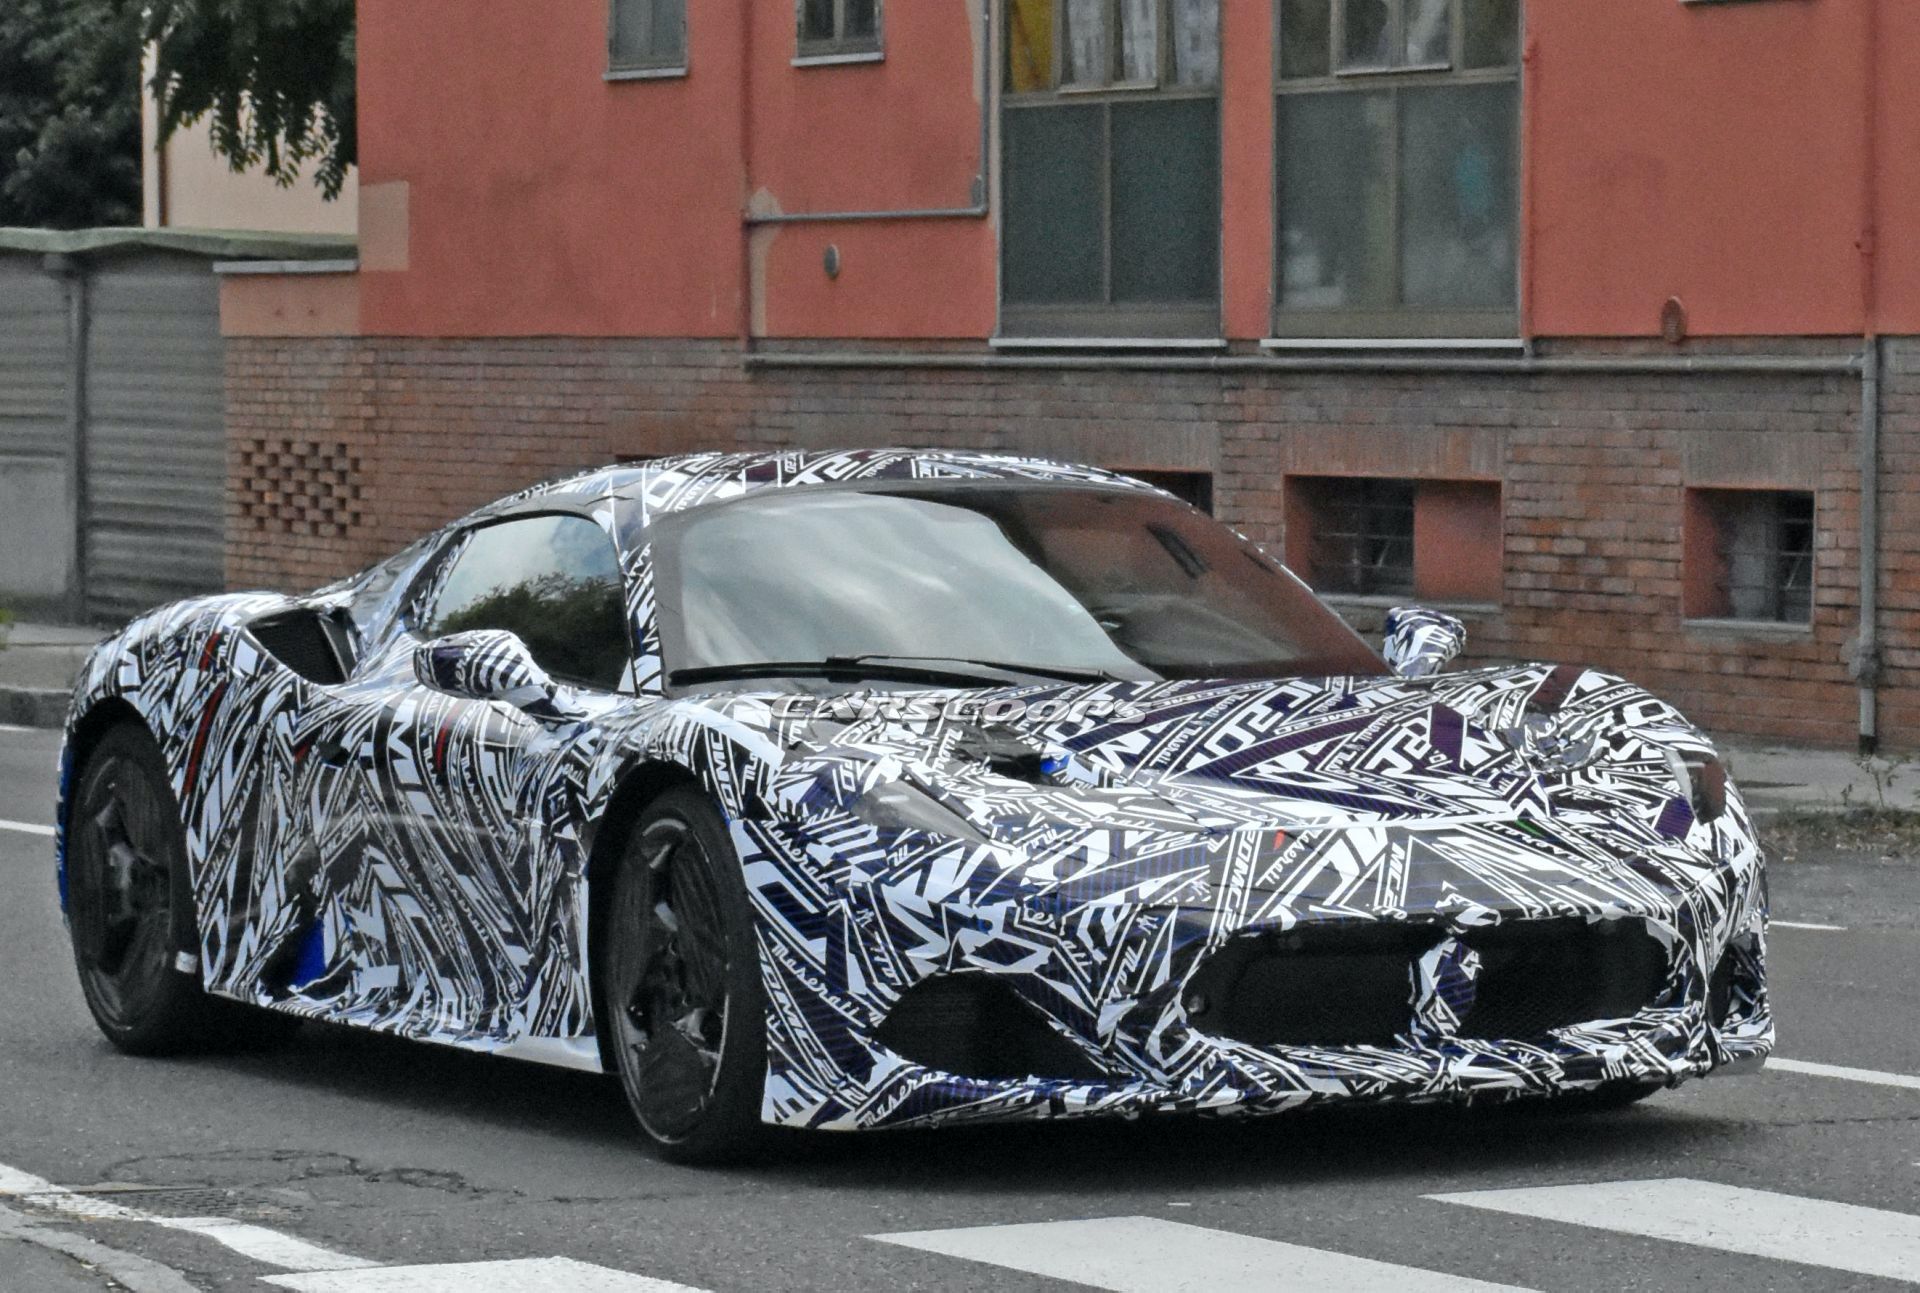 2021-Maserati-MC20-spy-shots-15.jpg